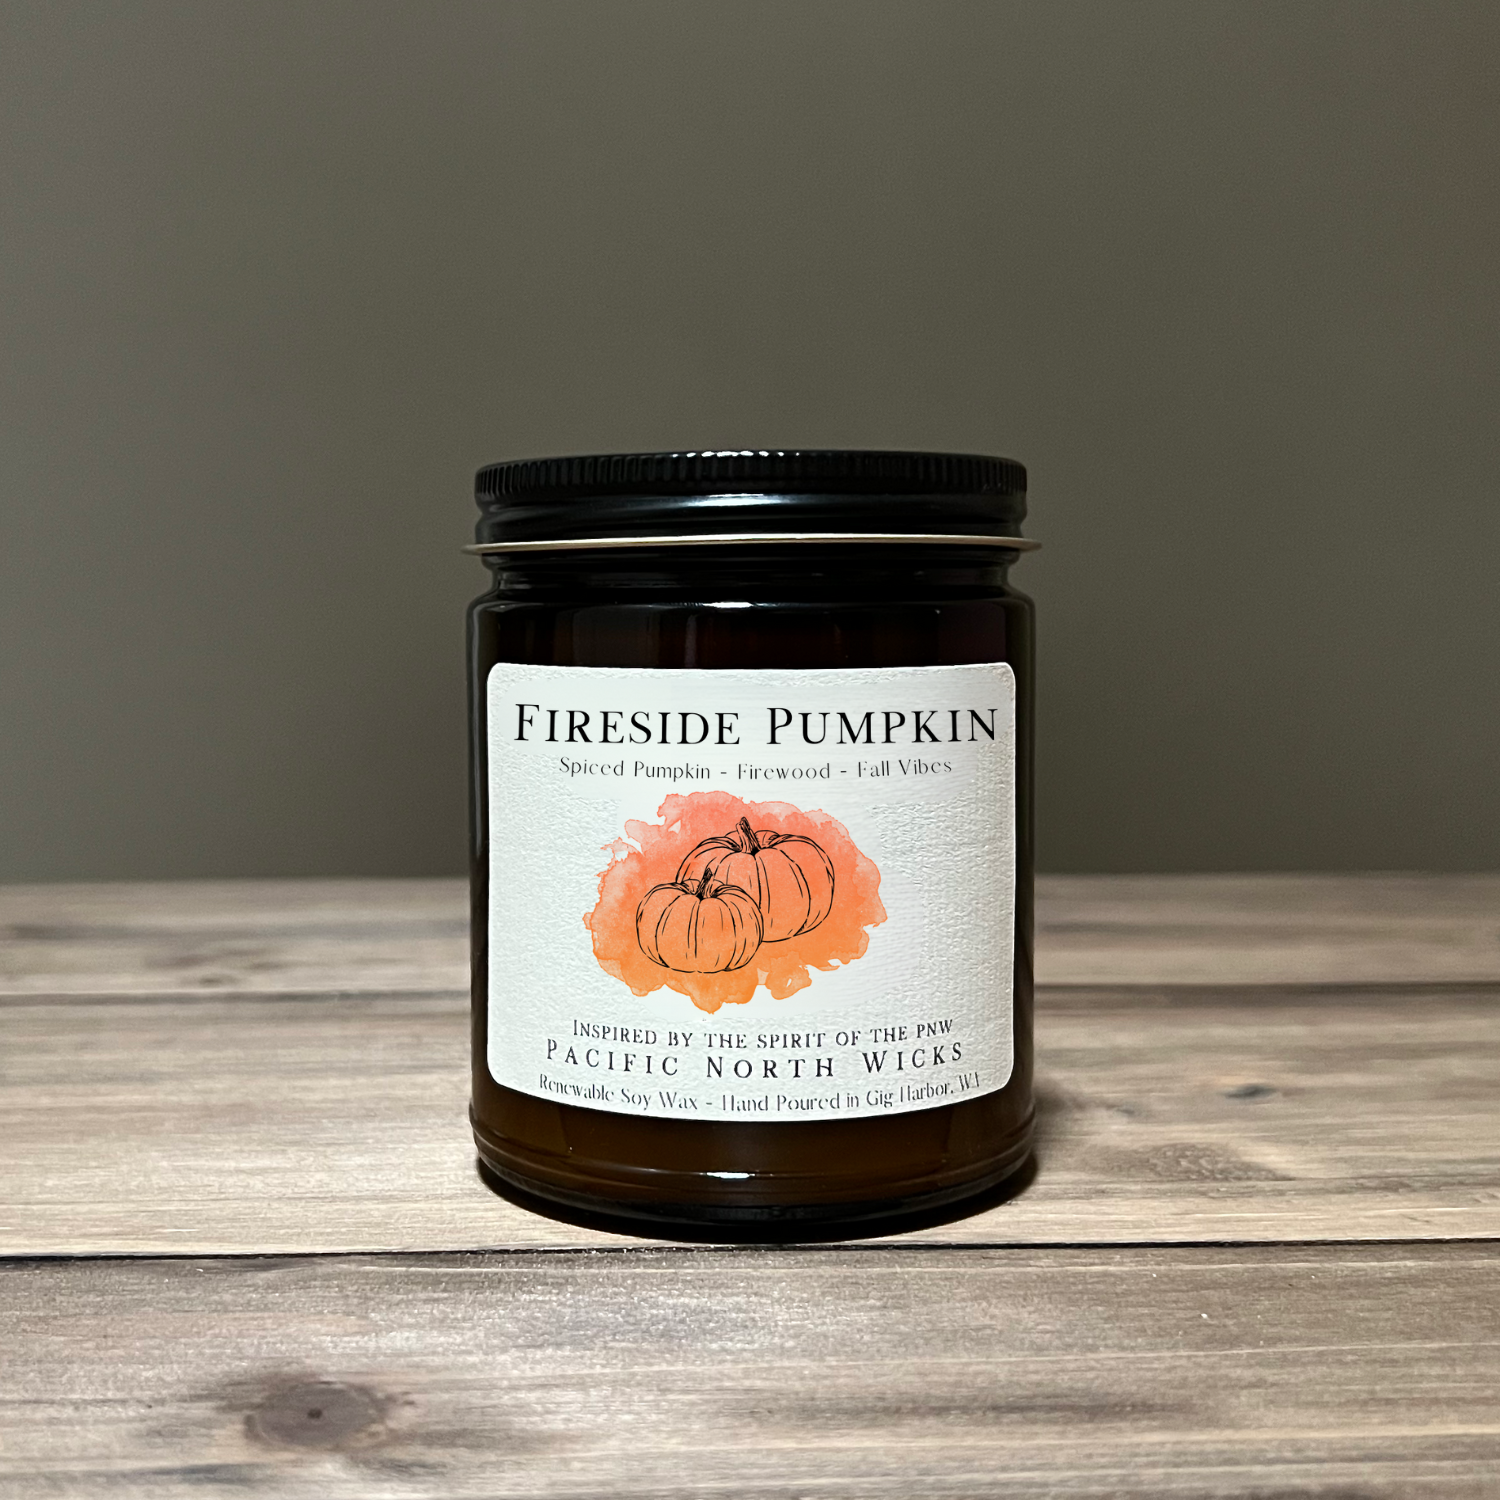 Fireside Pumpkin Candle - Amber Jar with Black Lid